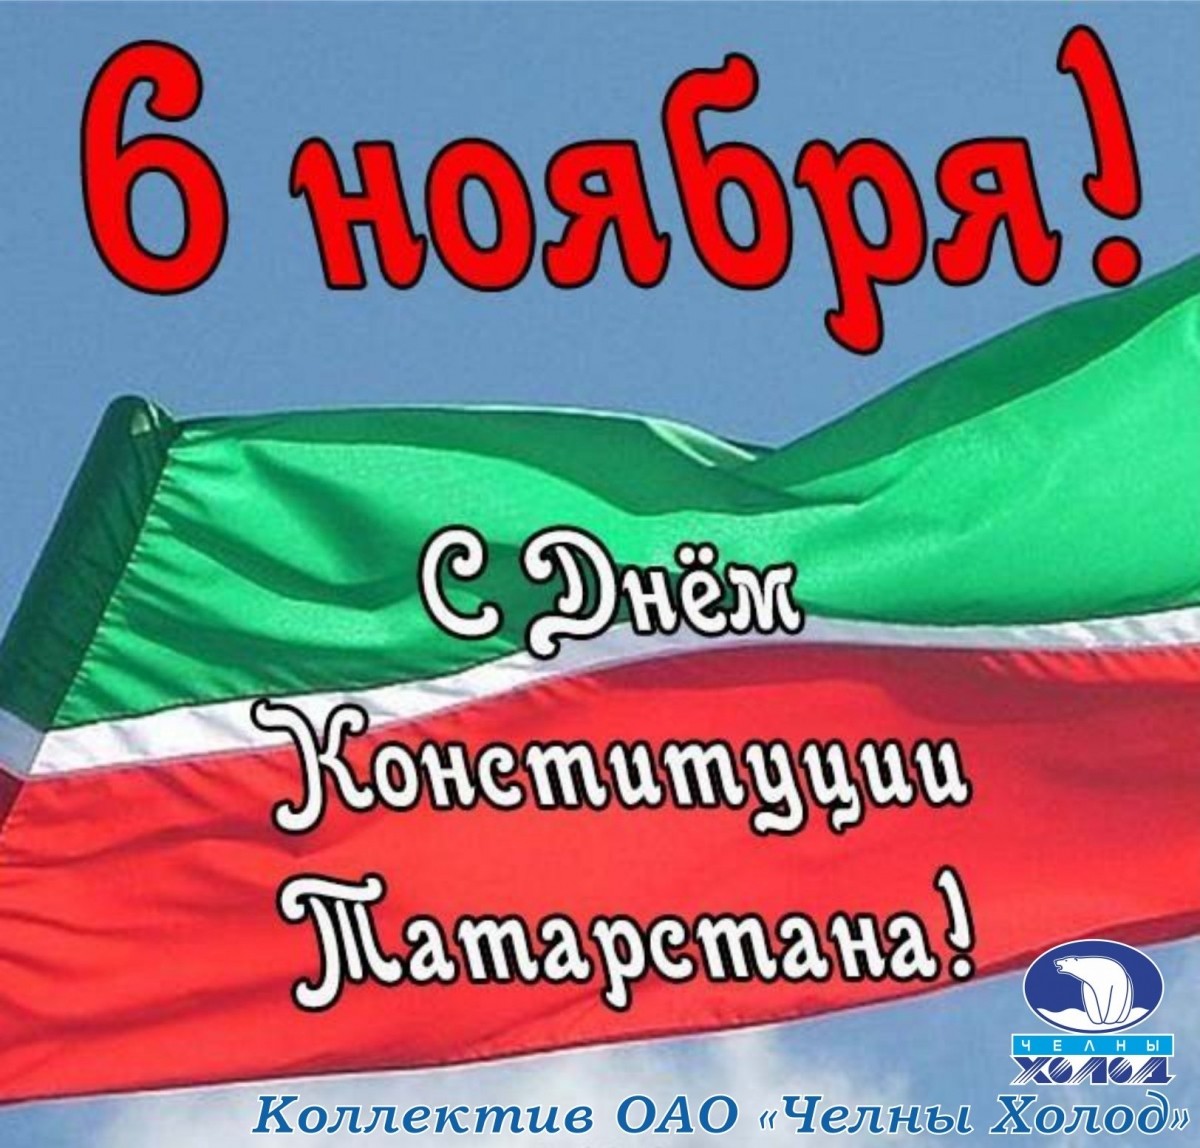 С Днем Конституции Республики Татарстан Поздравления Картинки